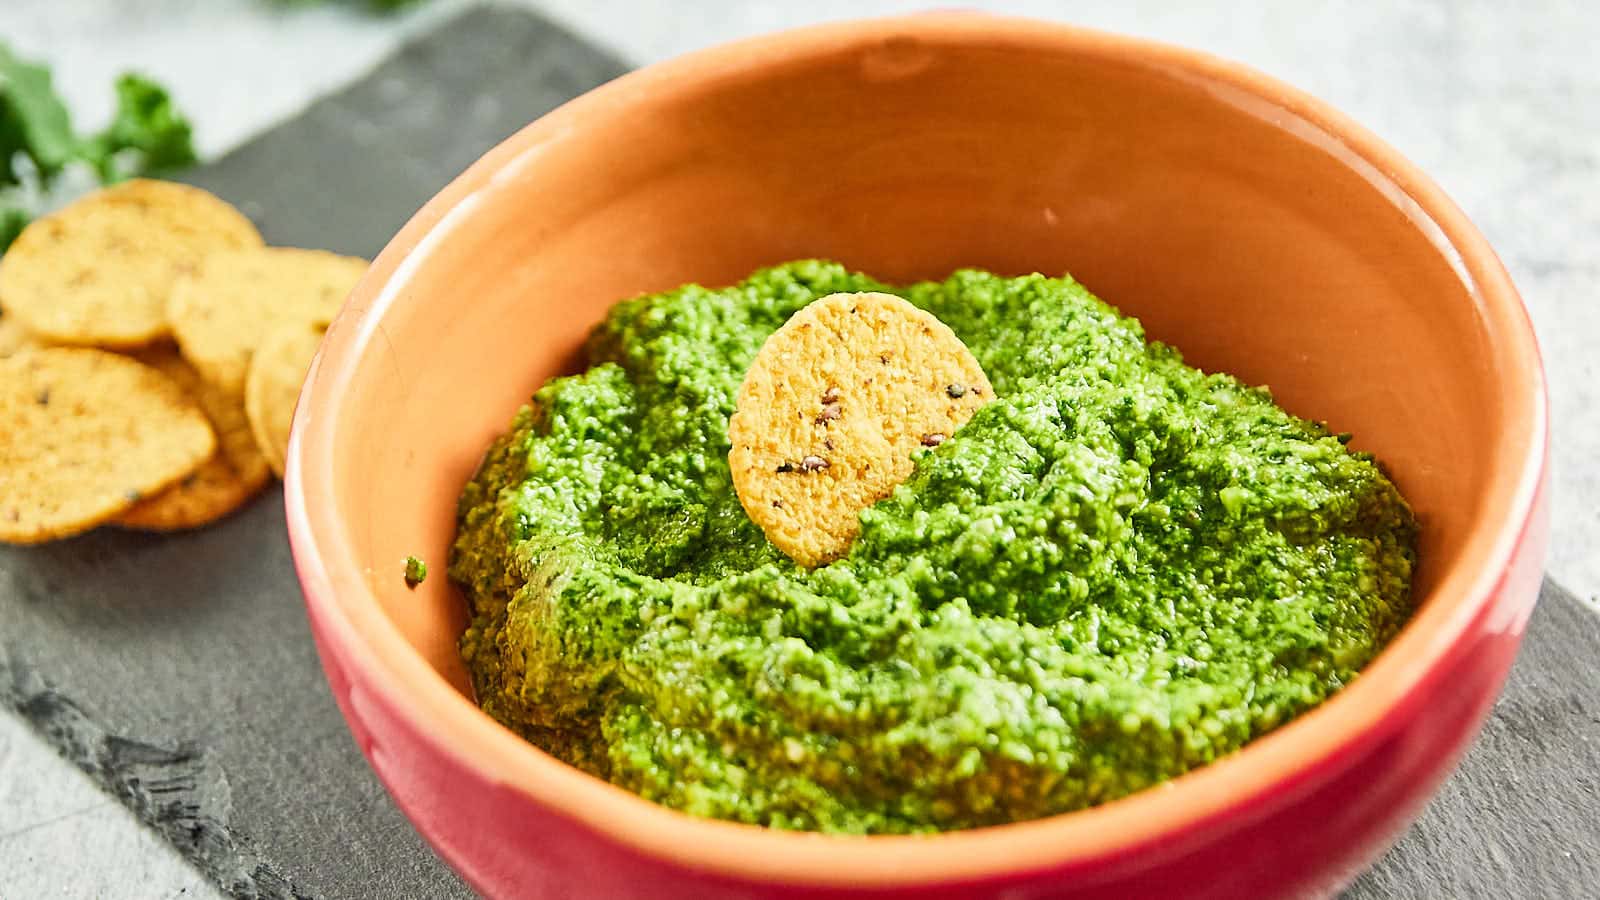 Kale Pesto Dip recipe by Cheerful Cook.